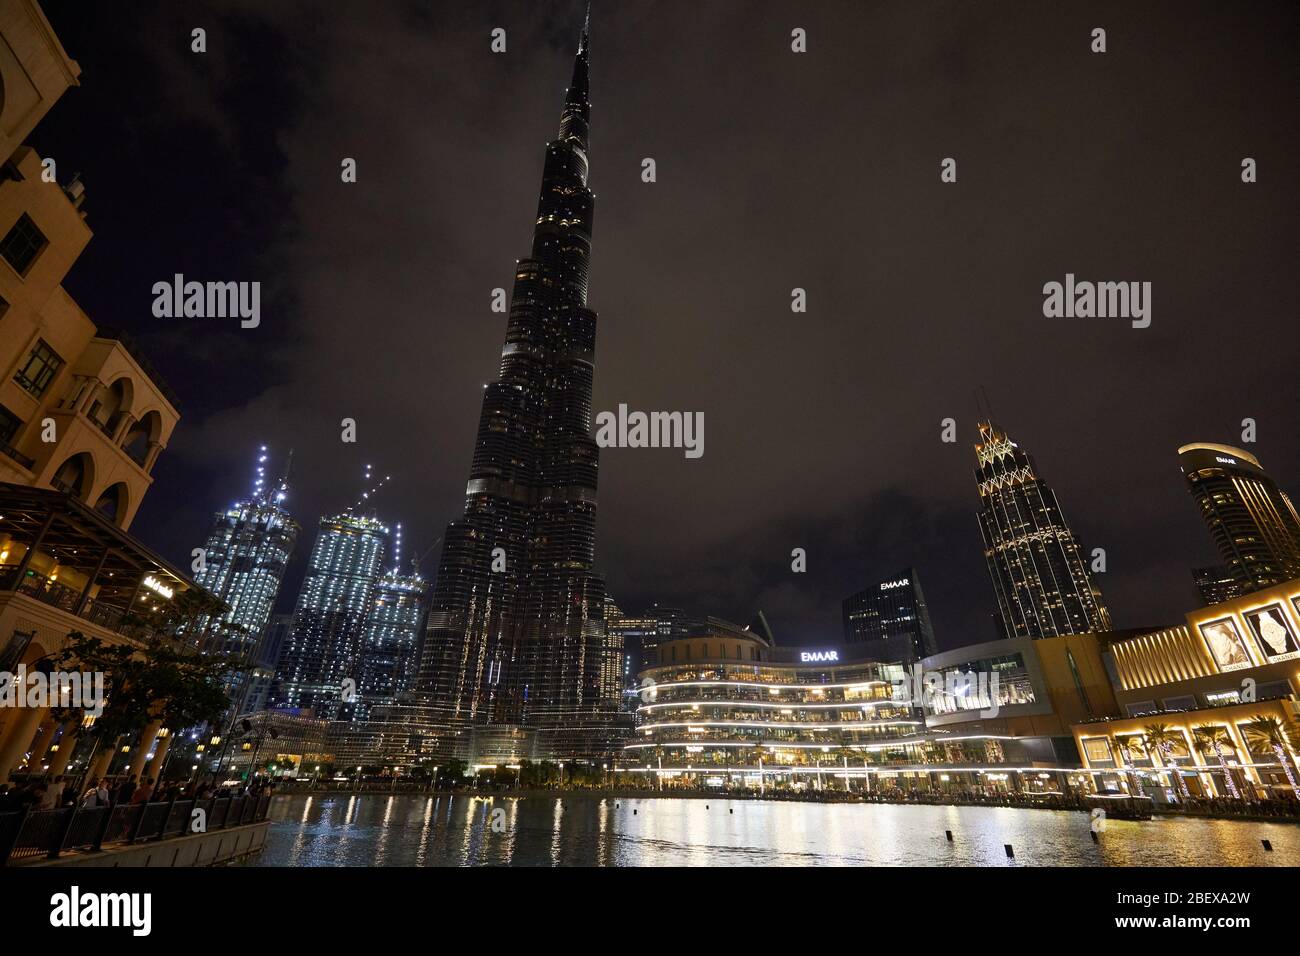 DUBAI, UNITED ARAB EMIRATES - NOVEMBER 21, 2019: Burj Khalifa skyscraper and Dubai Mall illuminated at night with people Stock Photo